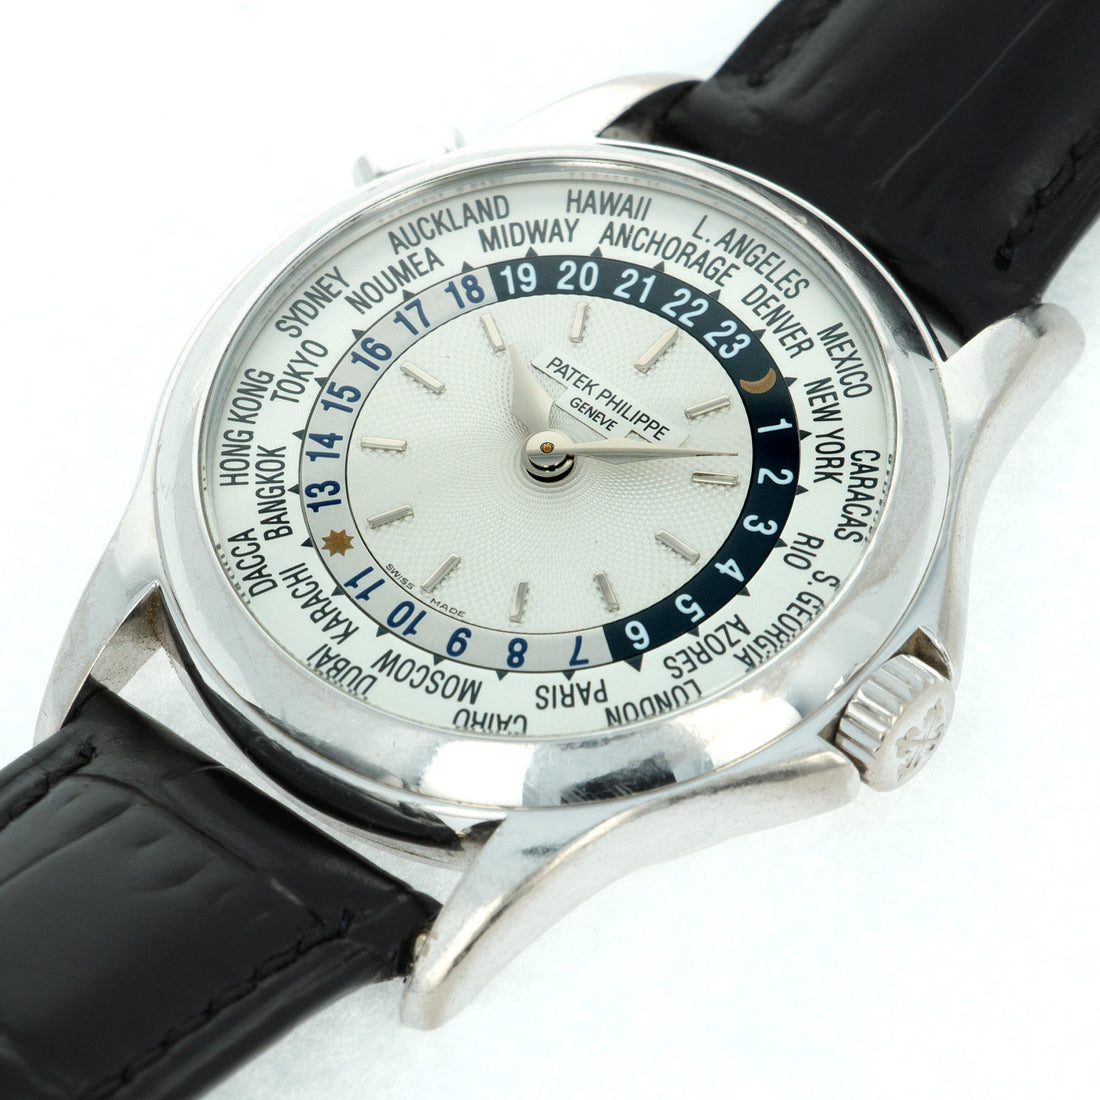 Patek Philippe White Gold World Time Watch Ref. 5110